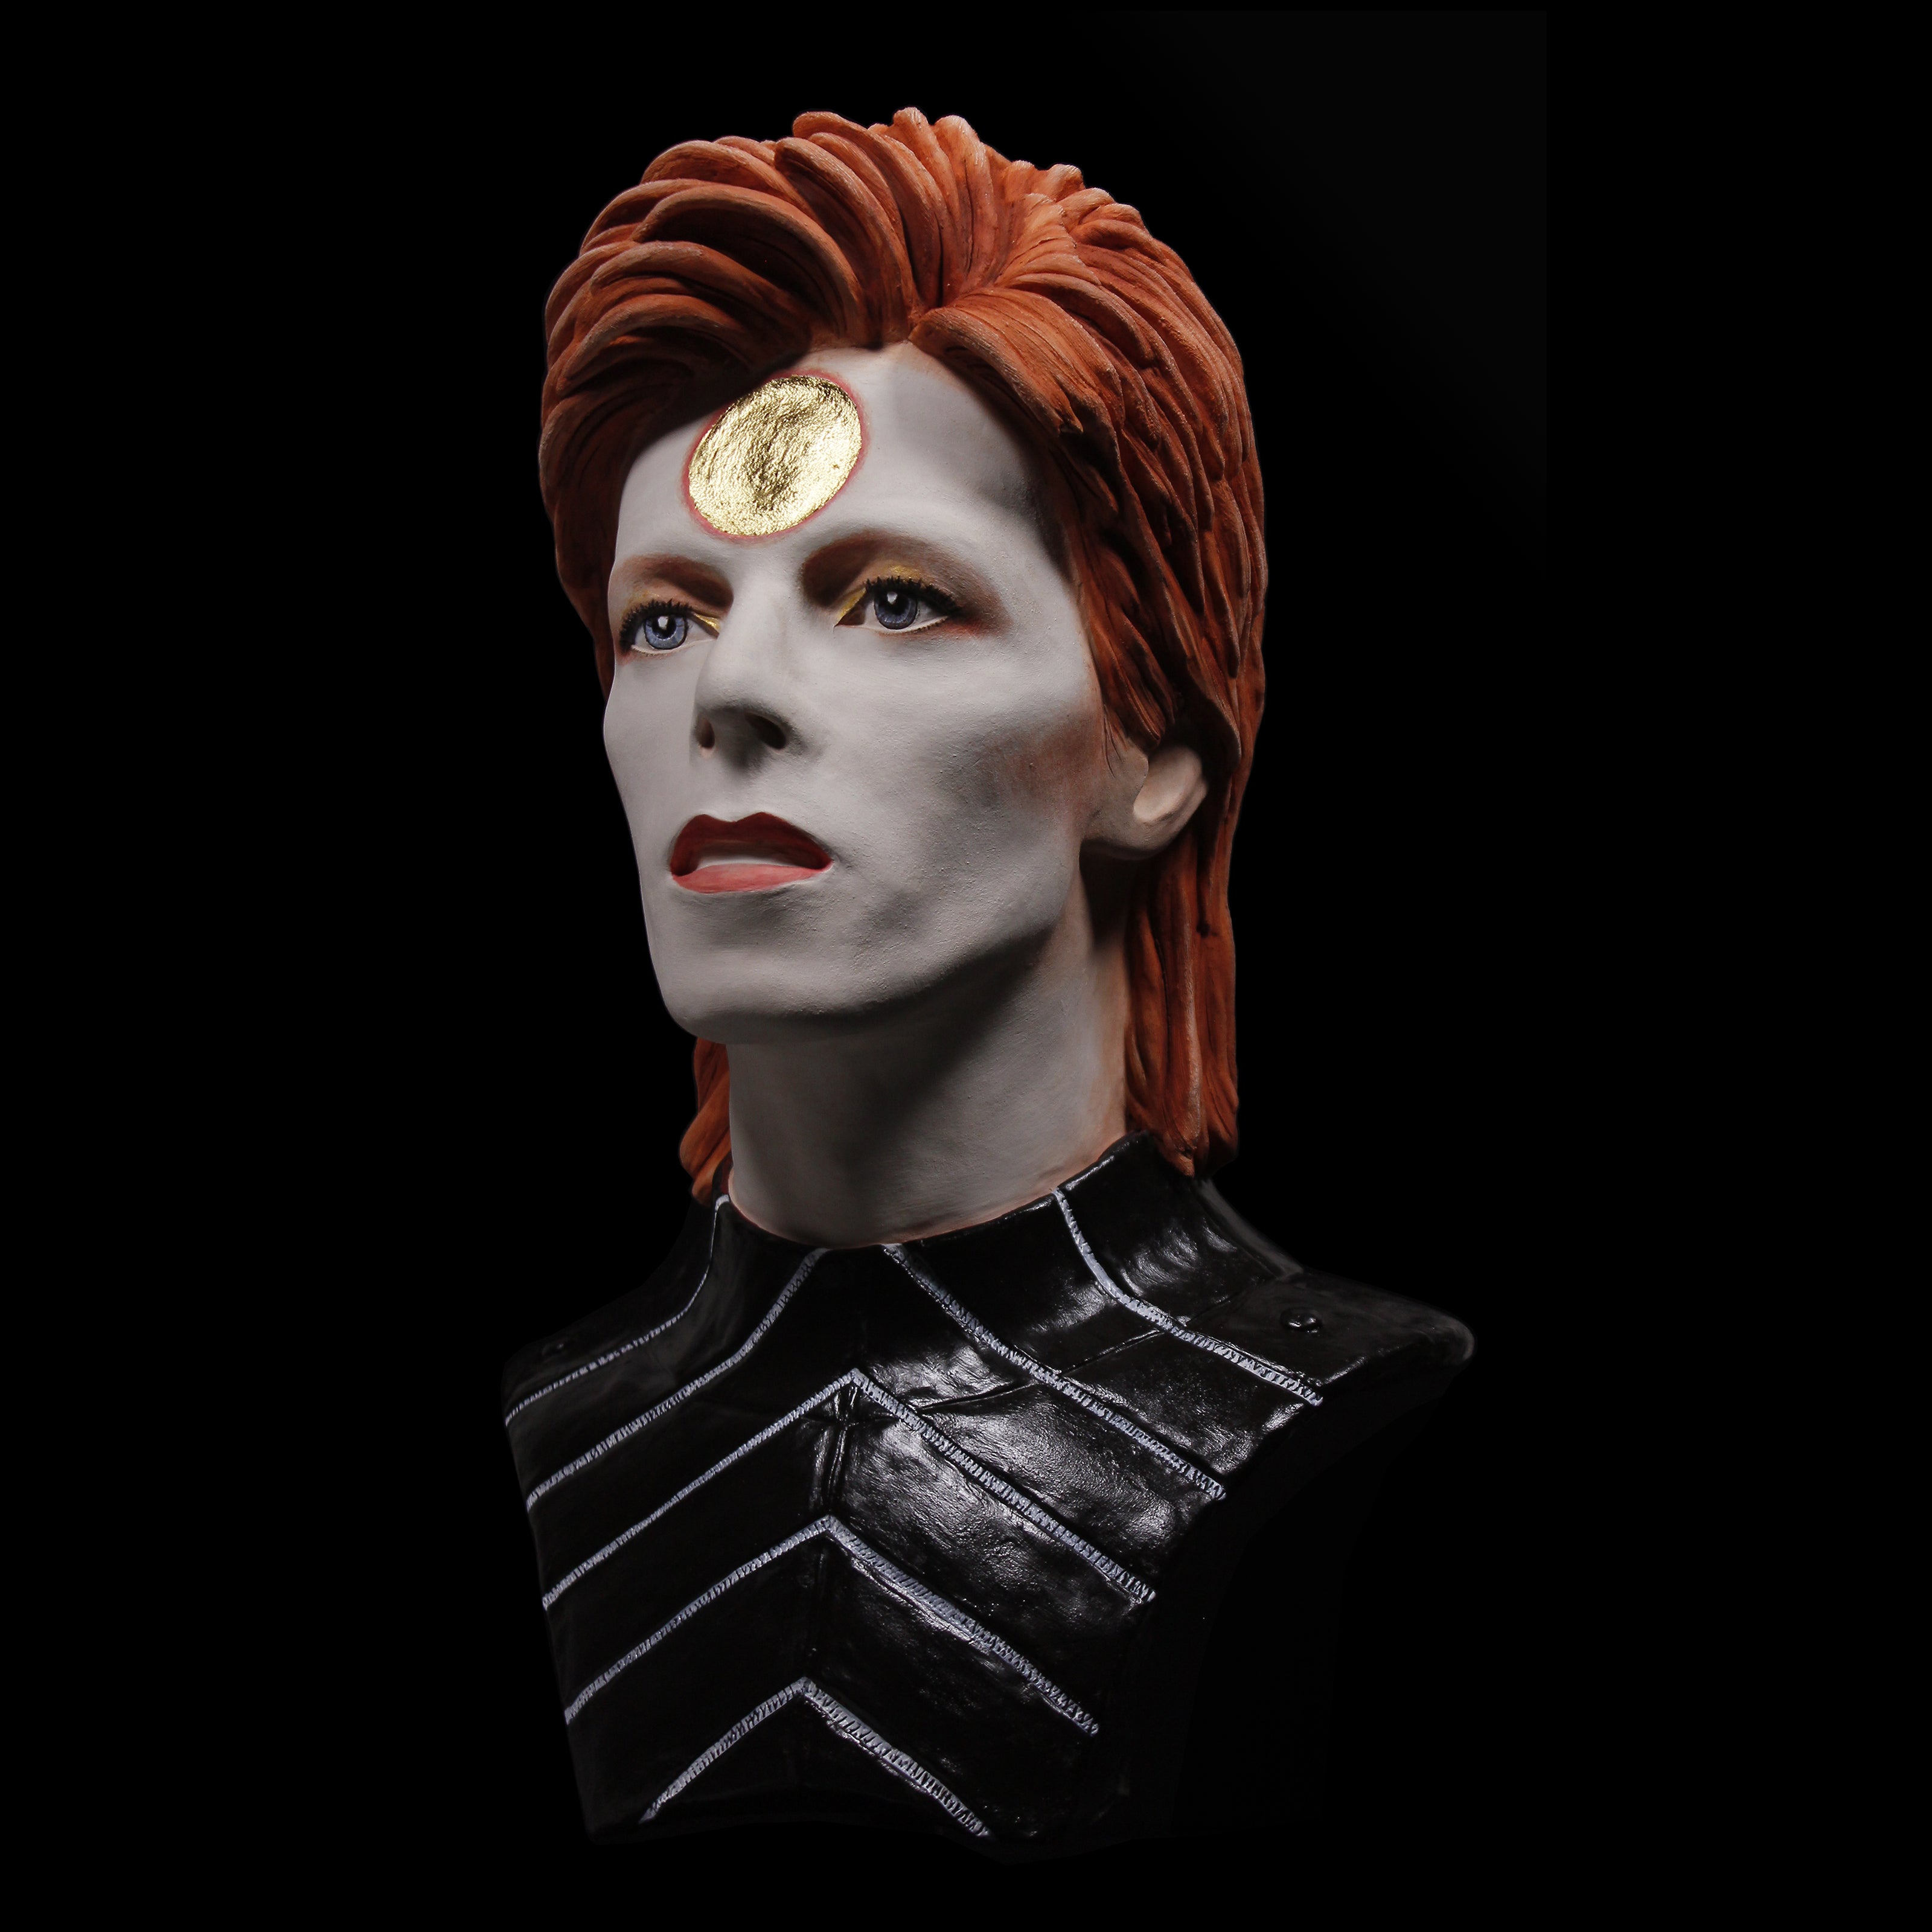 David Bowie Ziggy Stardust portrait sculpture hand painted ceramic by Maria Primolan Sculptor